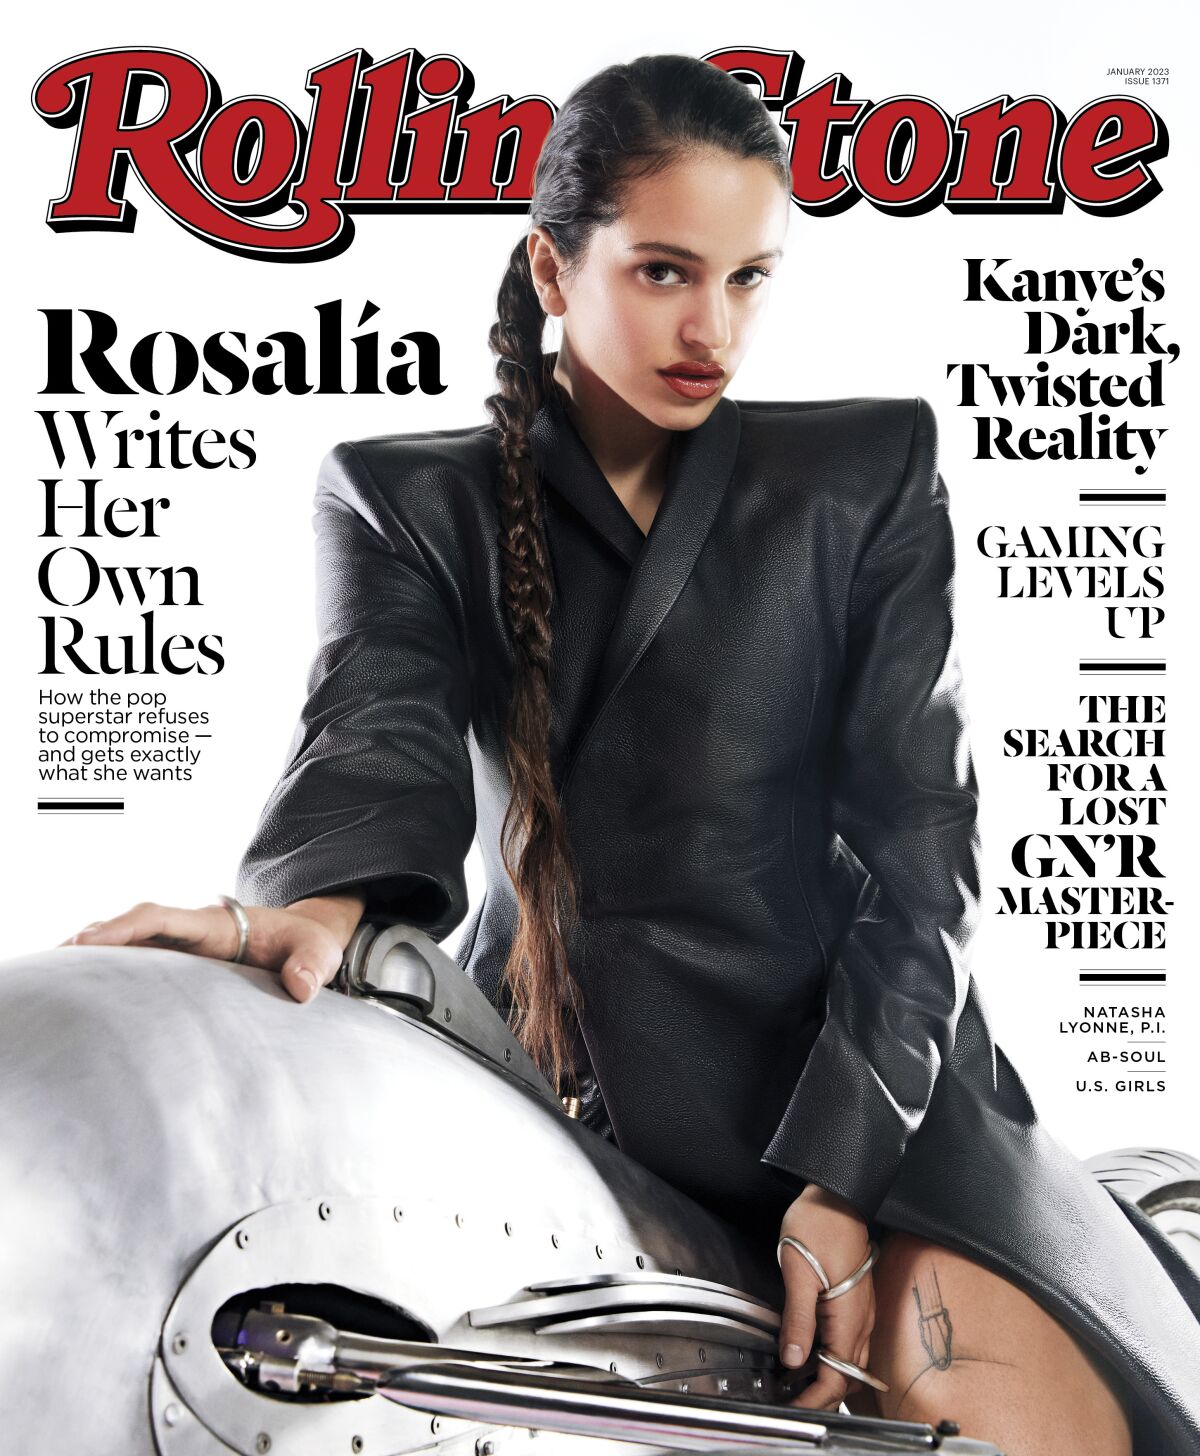 Rosalía, la primera artista de habla hispana en la portada de Rolling Stone  - San Diego Union-Tribune en Español